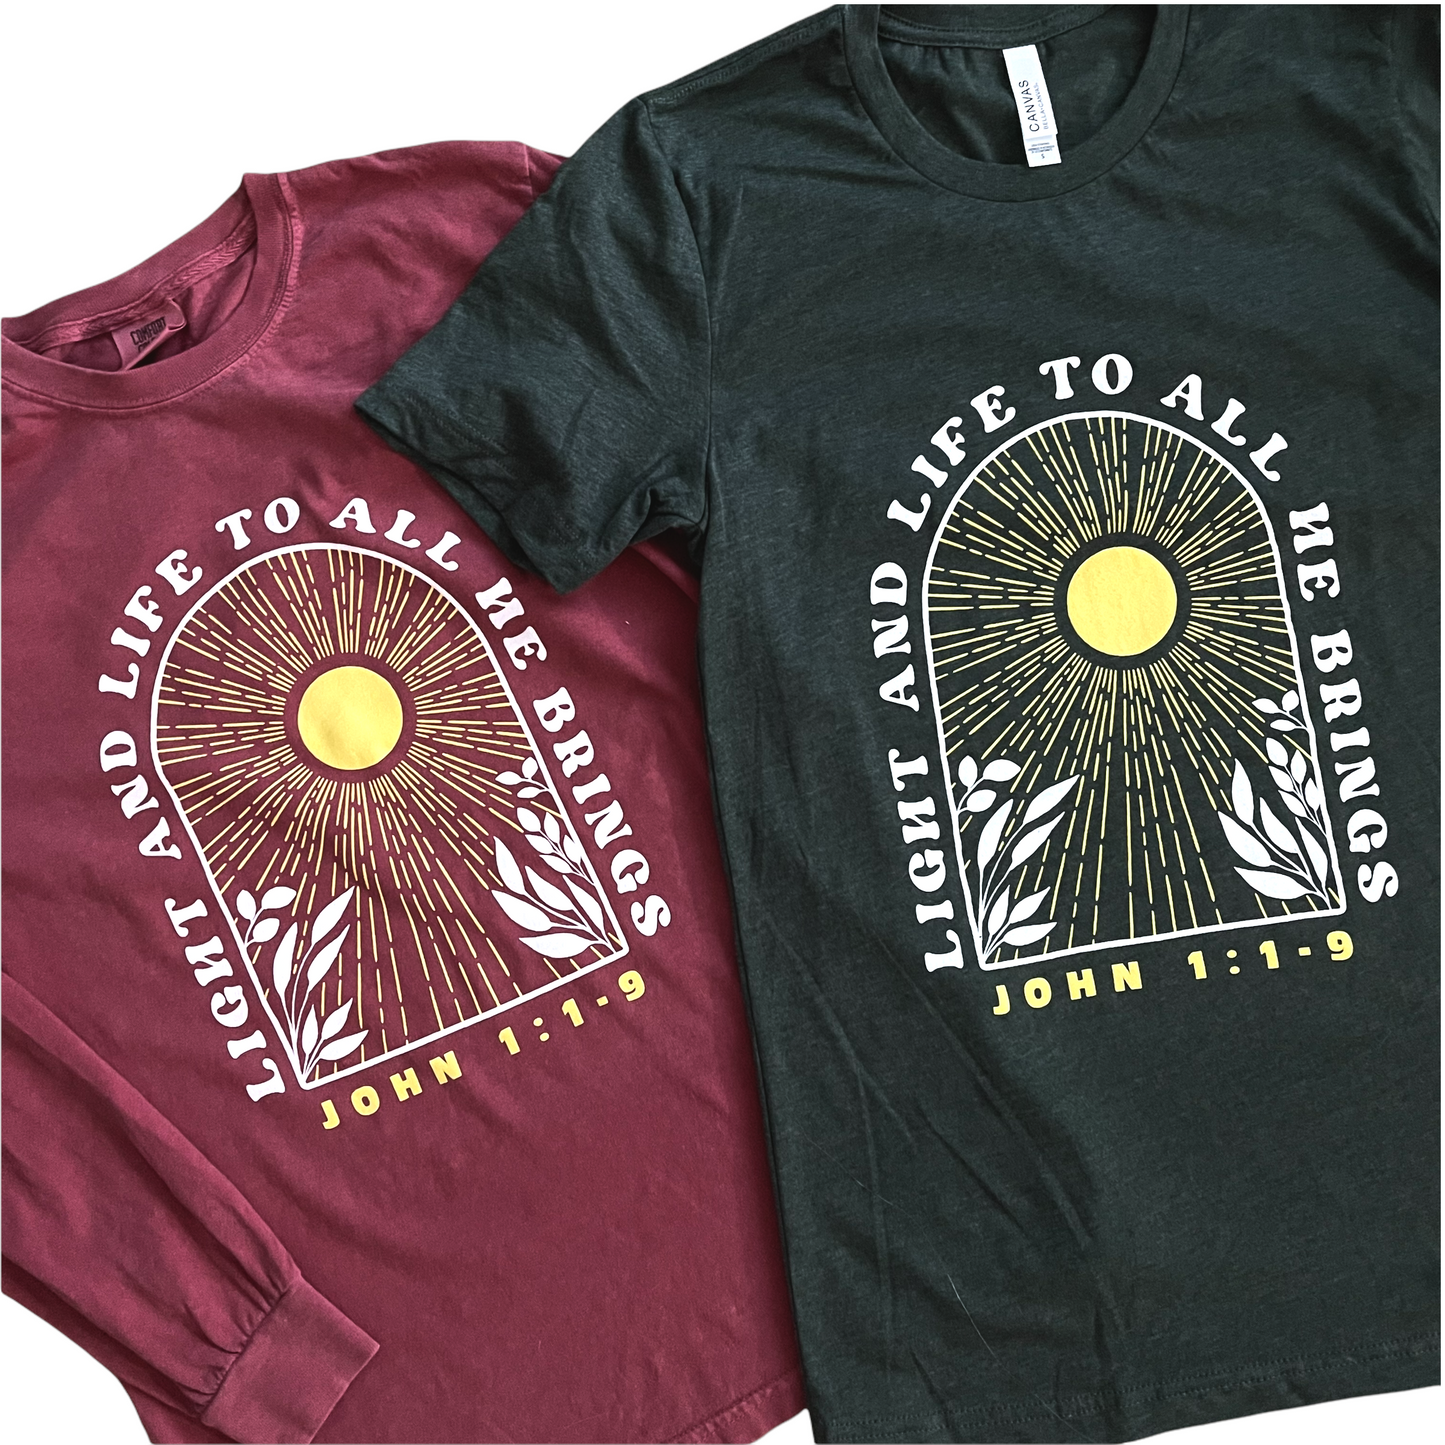 Light & Life | T-Shirt (S, M, L, XL, 2X remain)